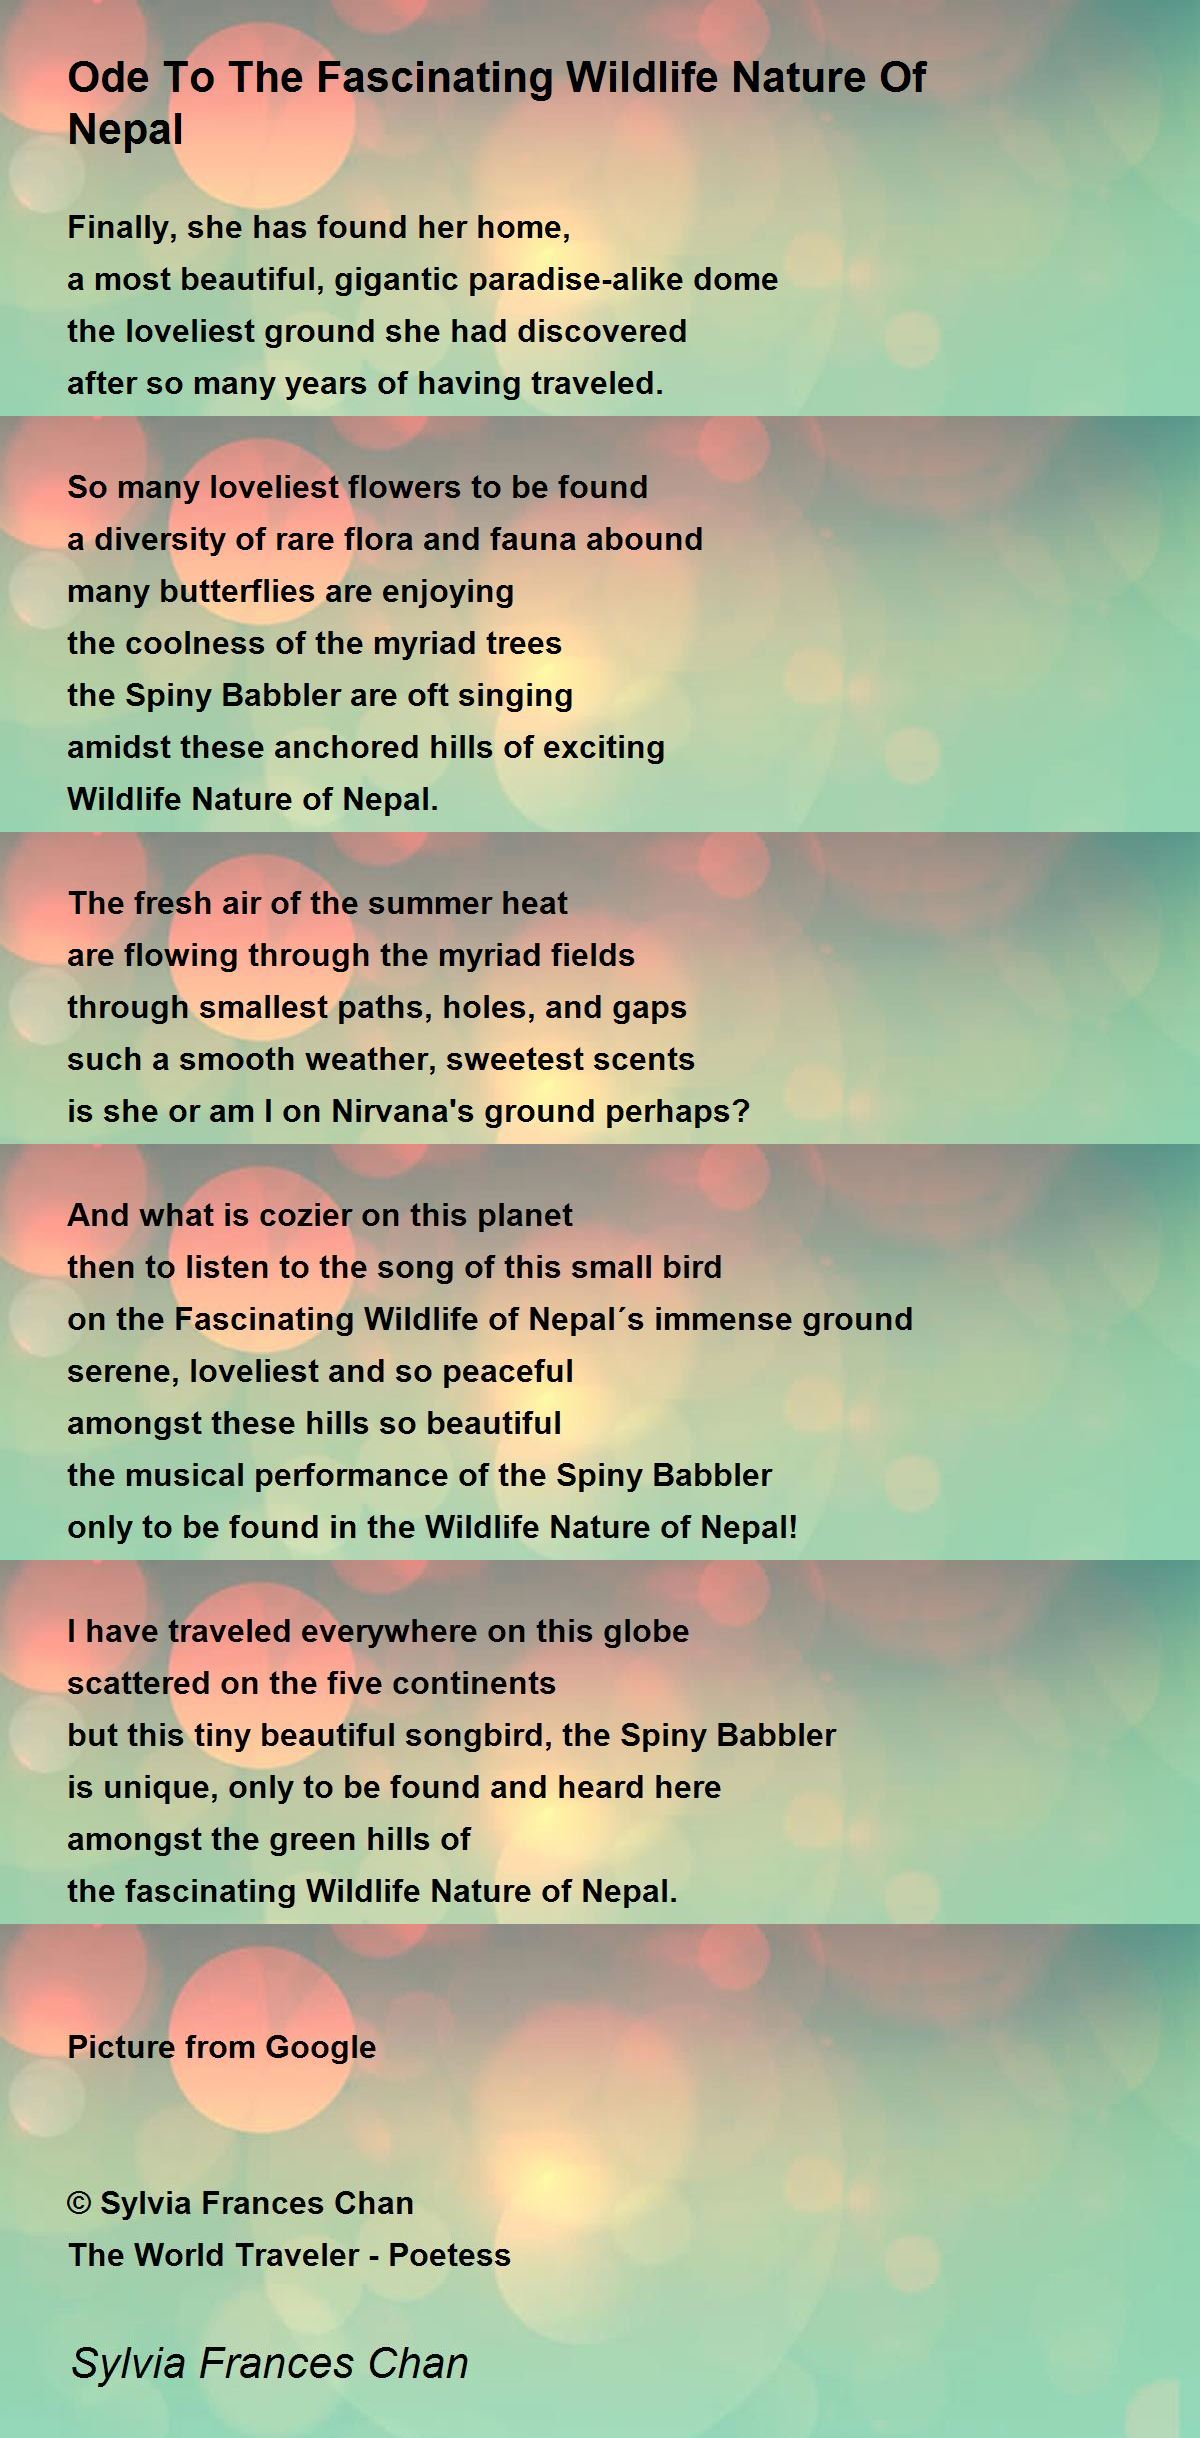 nepali love poems in nepali language